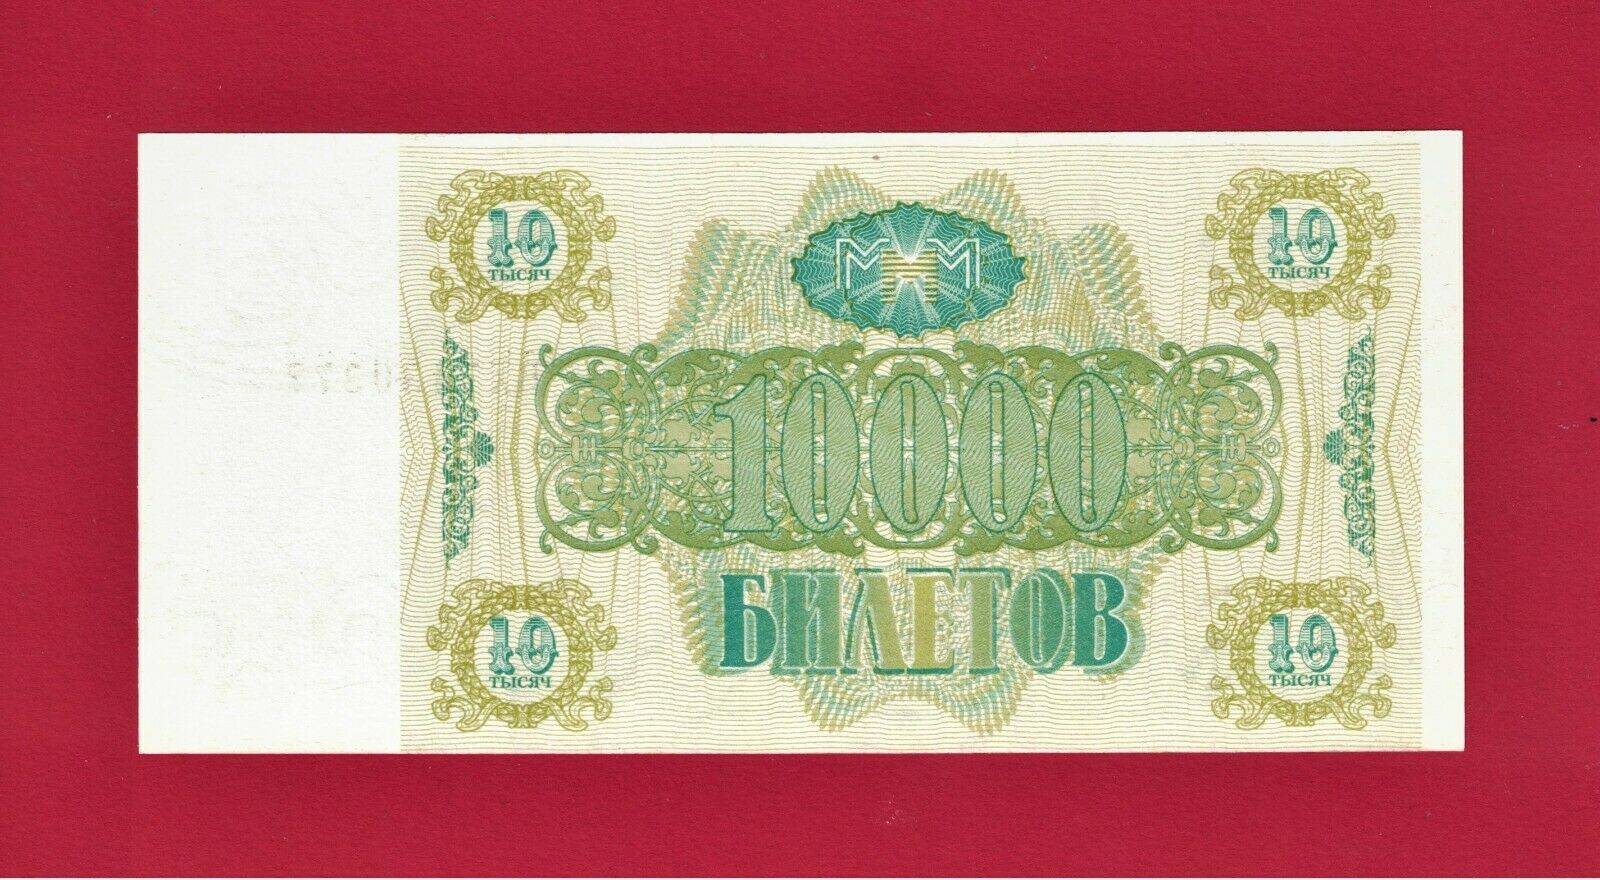 Sergei Mavrodi Russia Mmm Ponzi Scheme Bernie Madoff 10000 Biletov 1994 Unc Note